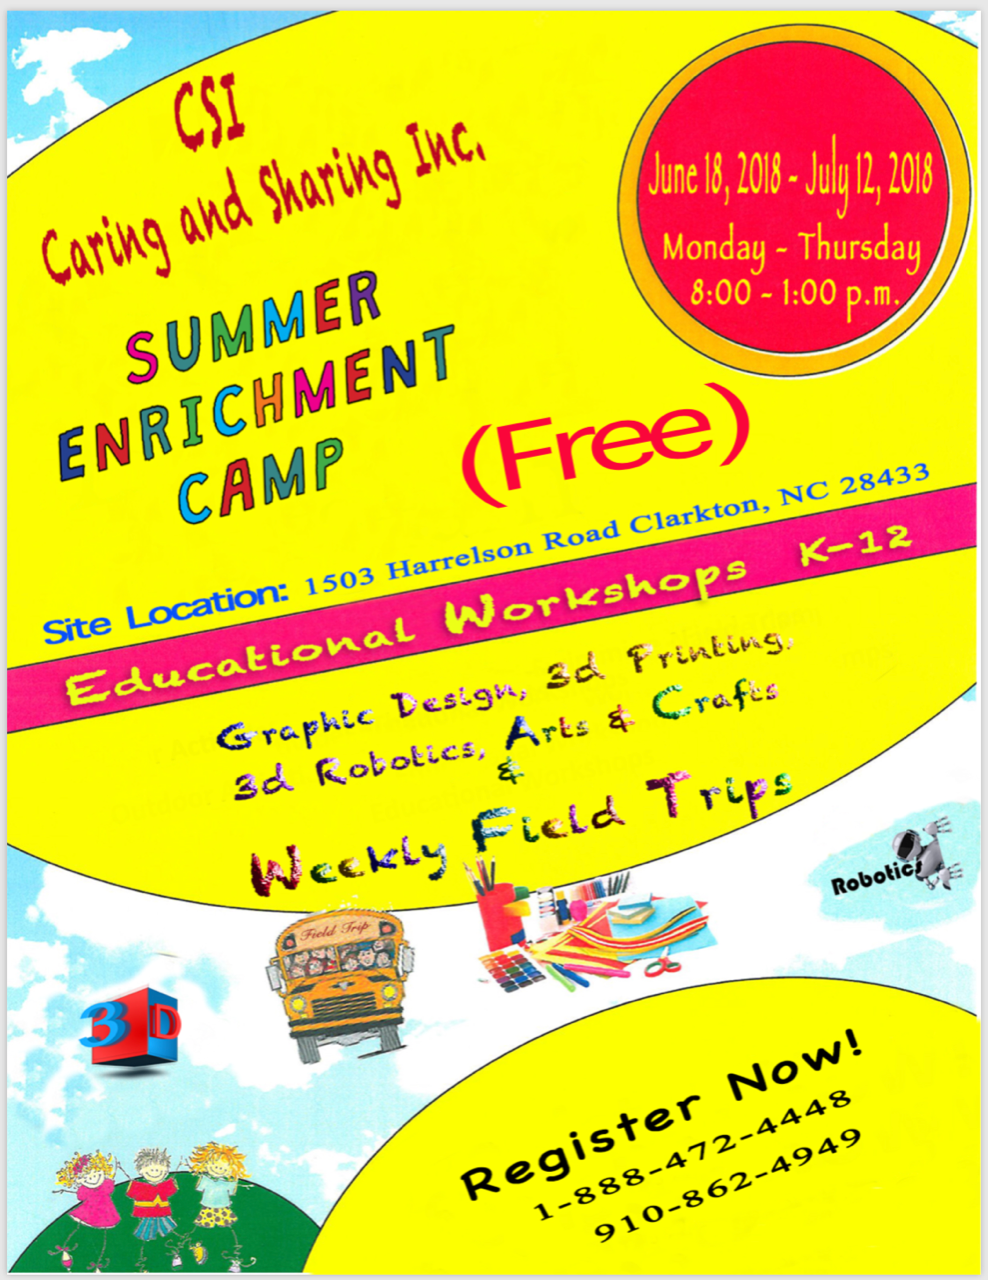 CSI Summer Enrichment Camp